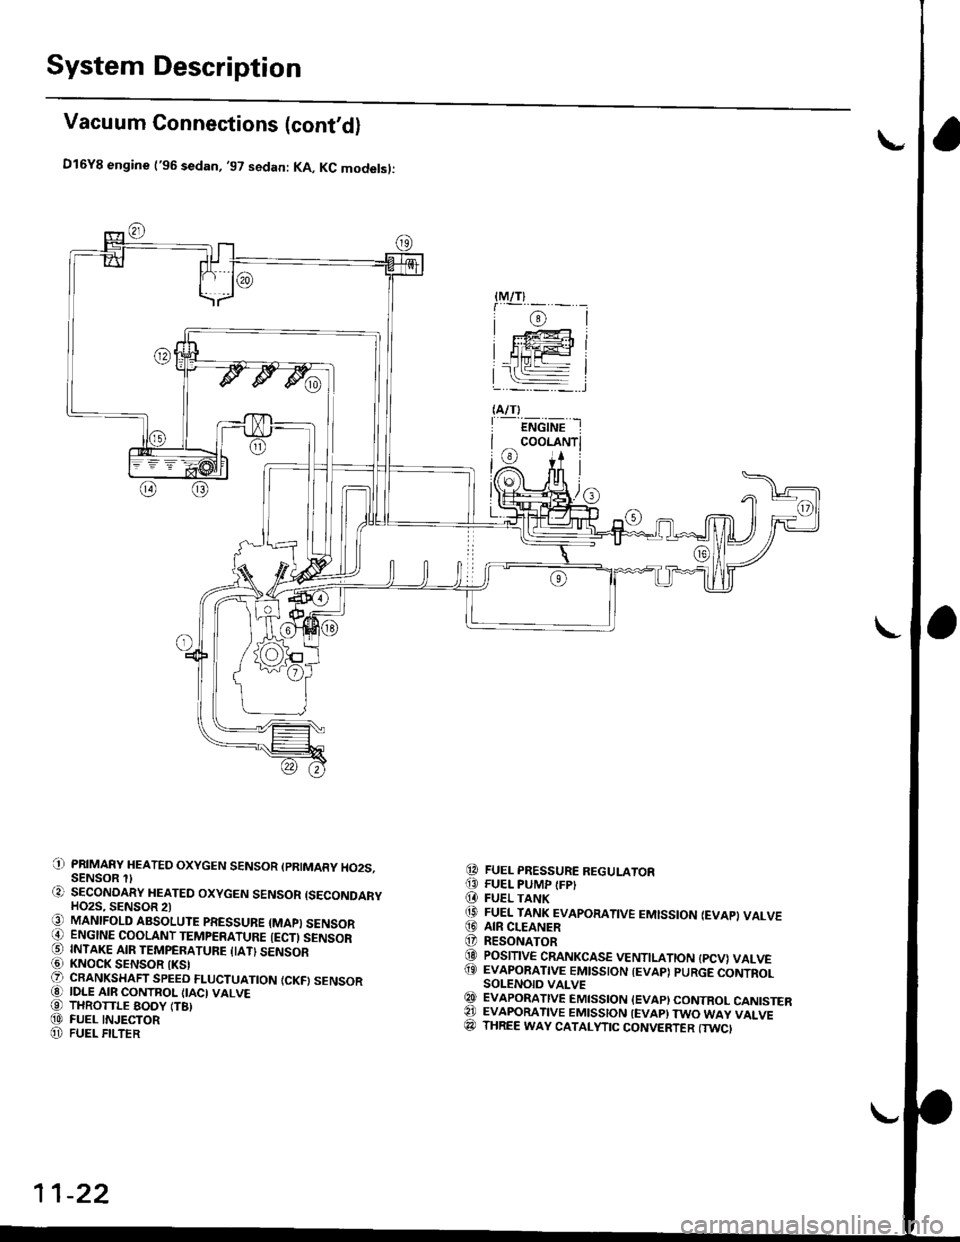 HONDA CIVIC 2000 6.G Workshop Manual System Description
Vacuum Connections (contd)
D16Y8 engine (96 sedan, 97 sedan: KA, KC modelsl:
PRIMARY HEATED OXYGEN SENSOR (PRIMARY HO2S.SENSOR  SECONOARY HEATED OXYGEN SENSOR {SECONDARYHO2S, SEN